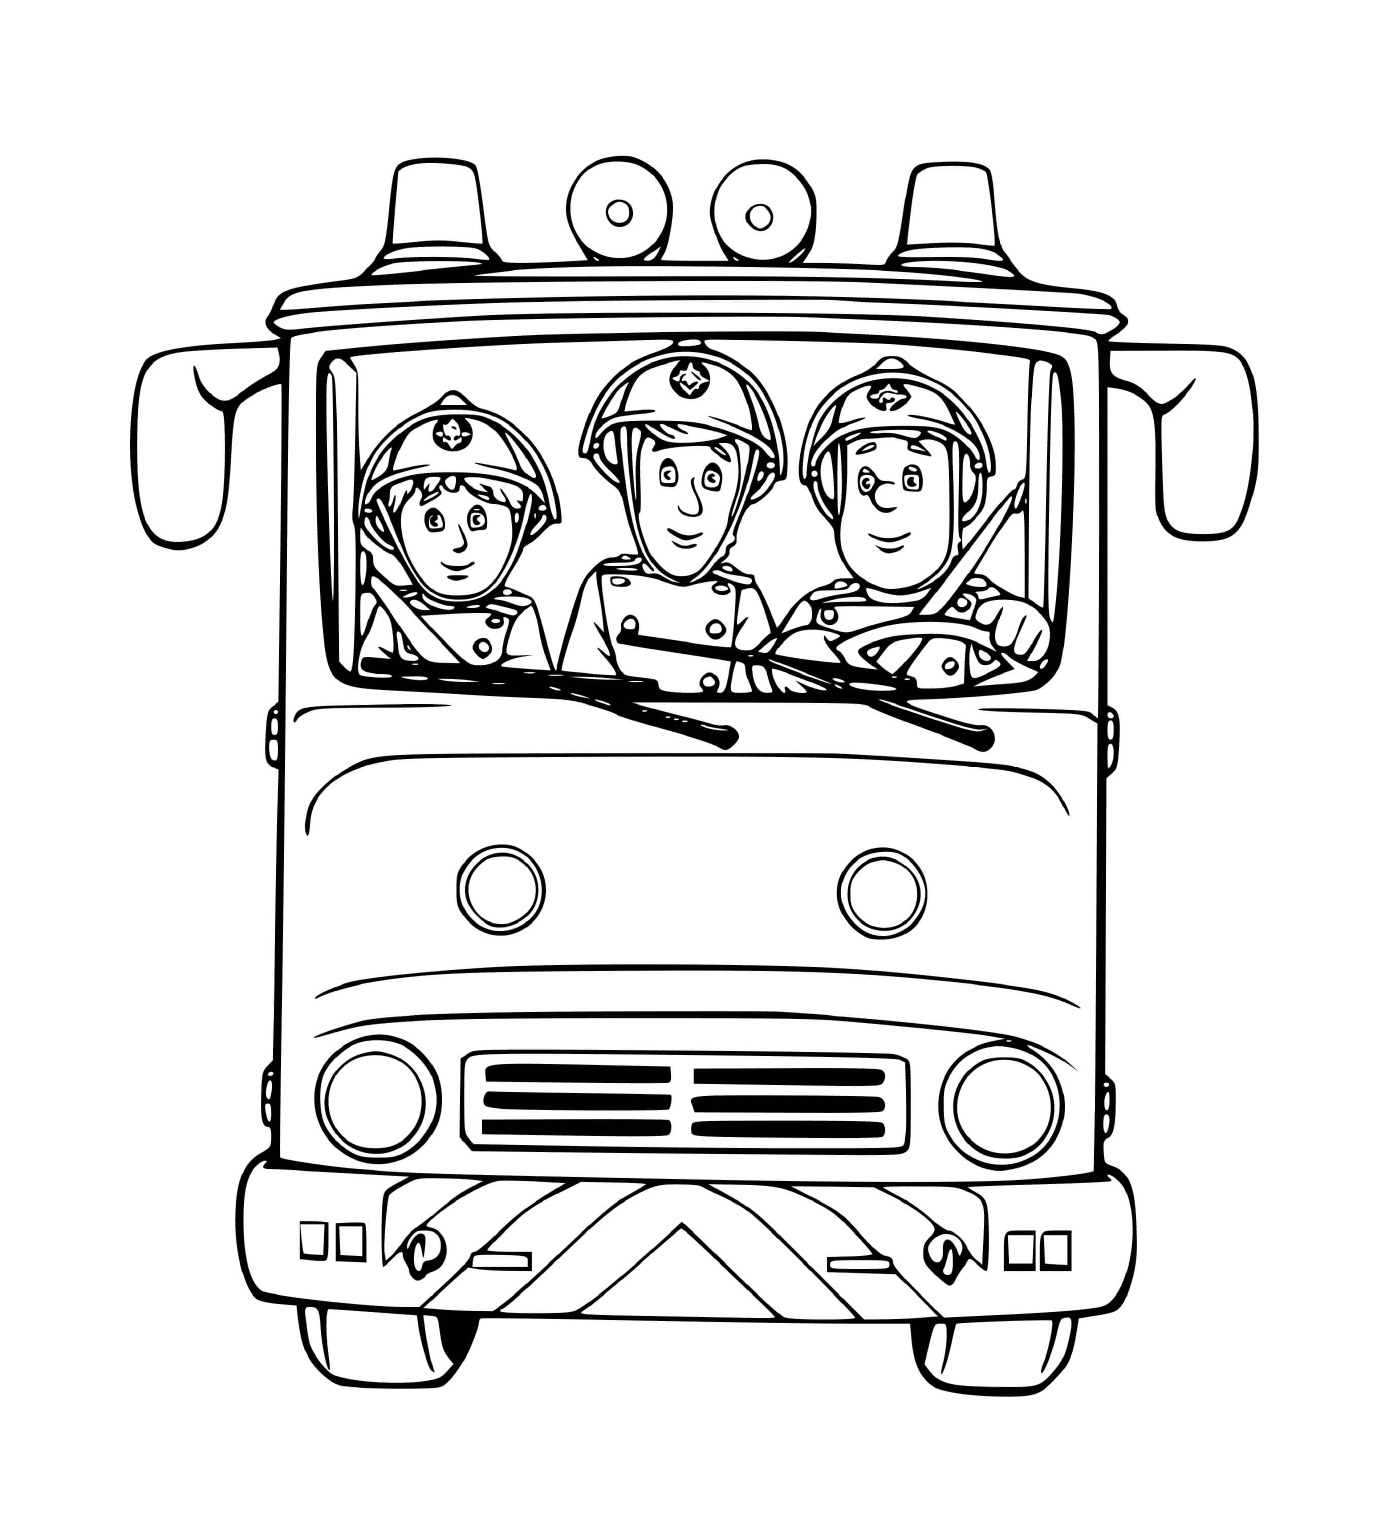  Fire truck, three firefighters ready 